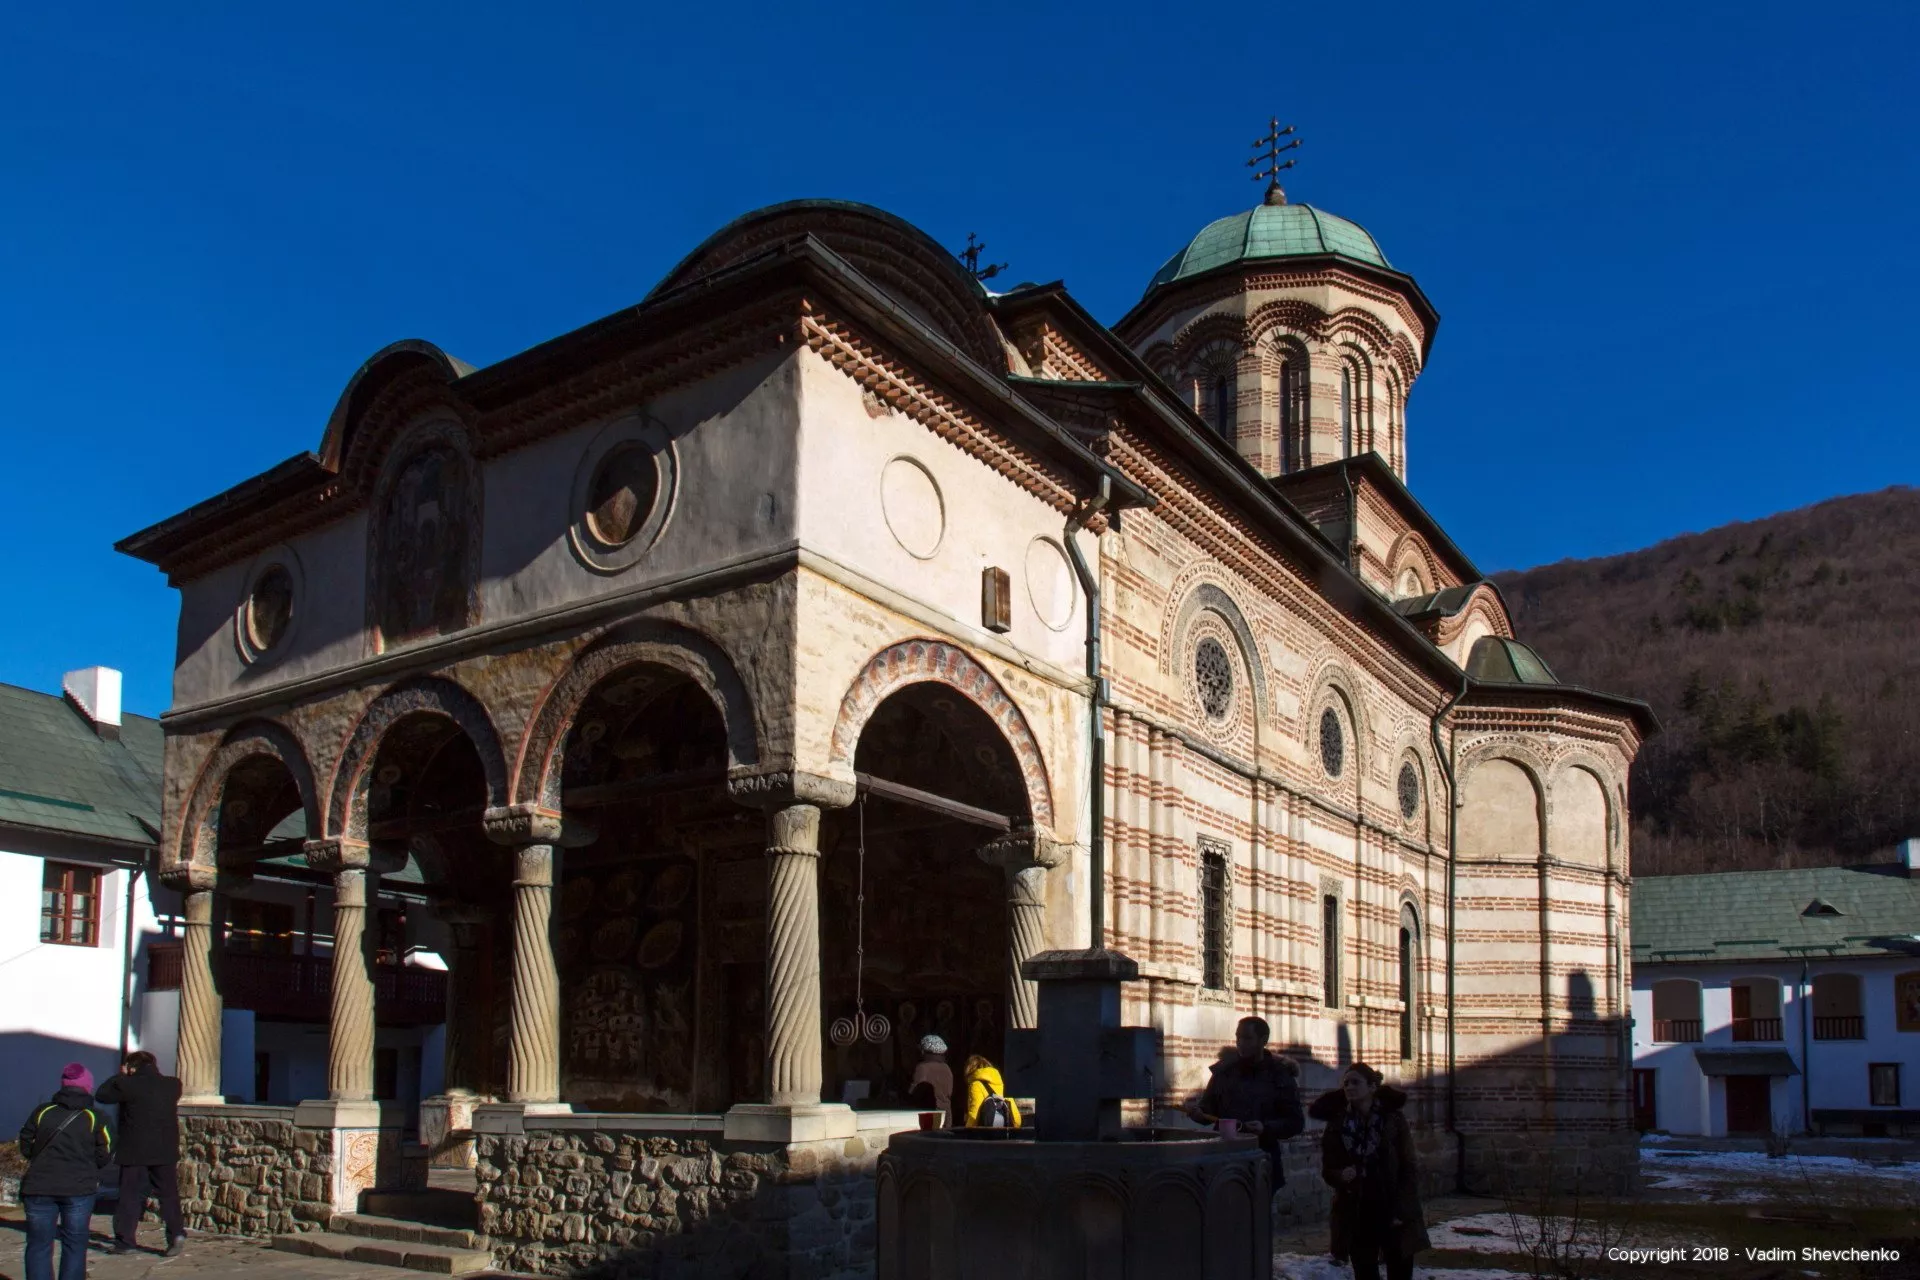 Cozia Monastery in Romania, Europe | Architecture - Rated 4